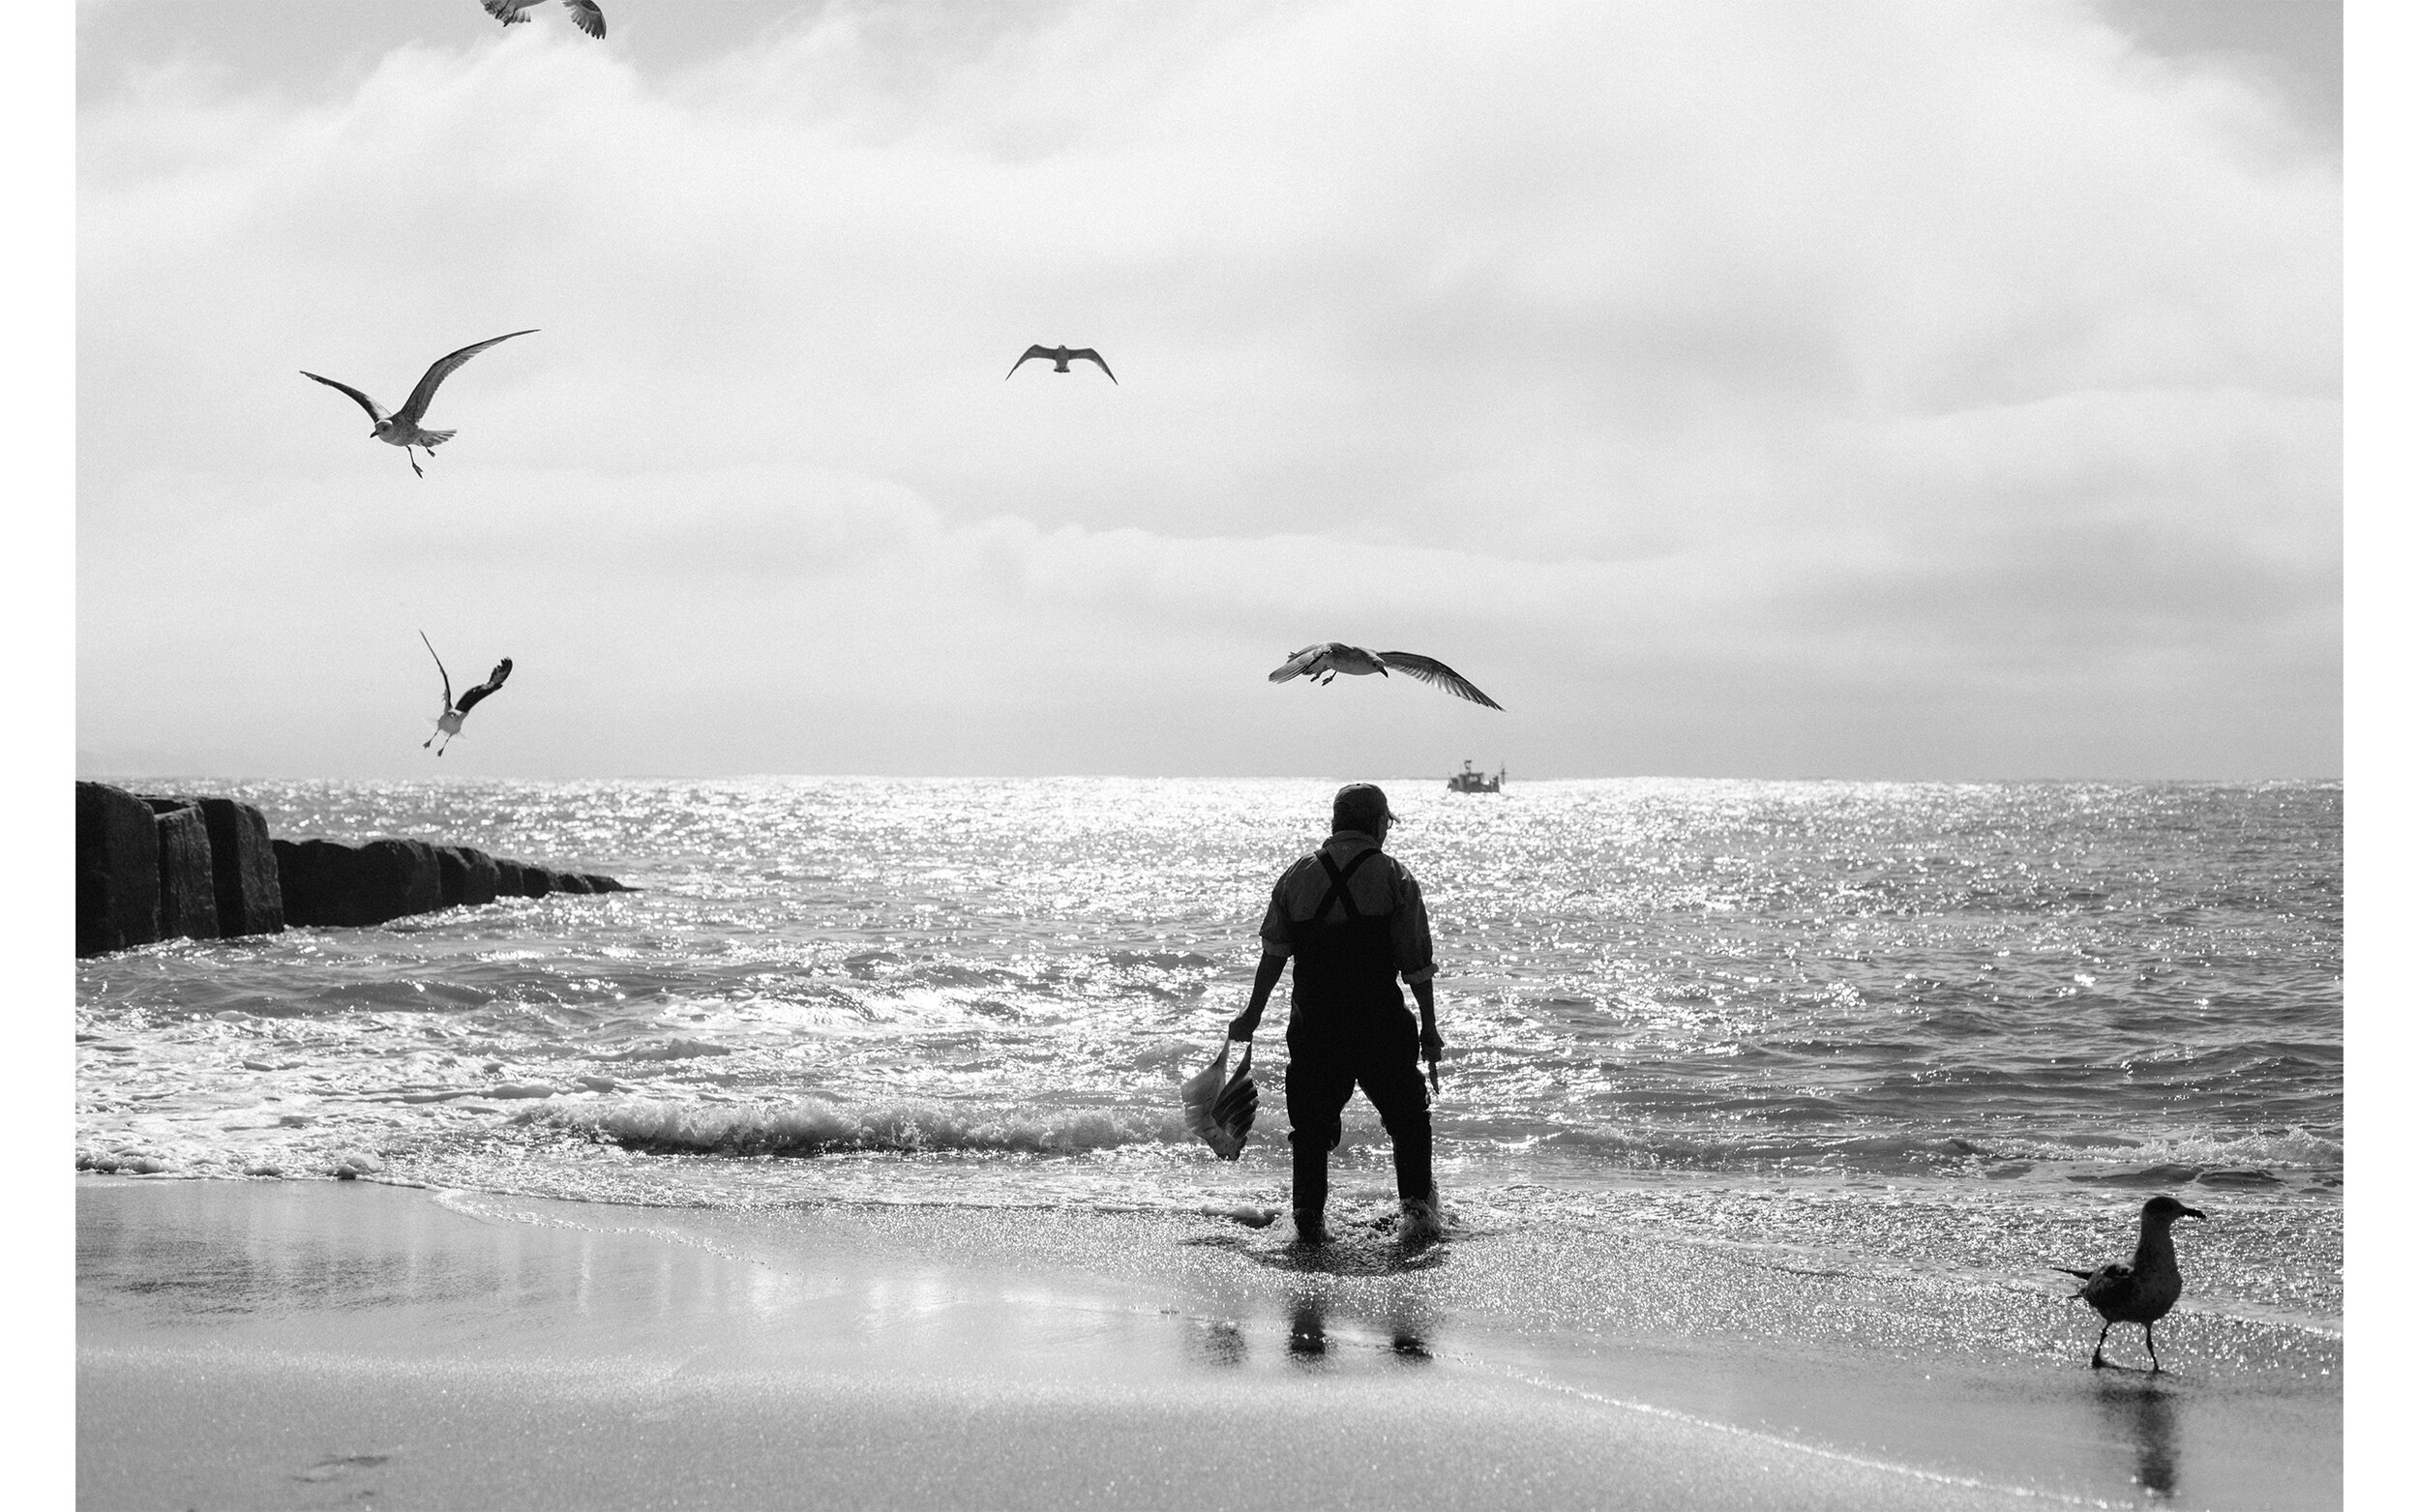 toby-butler-photographer-photography-portugal-surfing-surf-landscape-travelphotographer-inkglobal-portrait-tourism-ocean-algarve-photo-surfer-love-earth-climate-planet-beautiful-wild-people- portrait-documentary-5.jpg